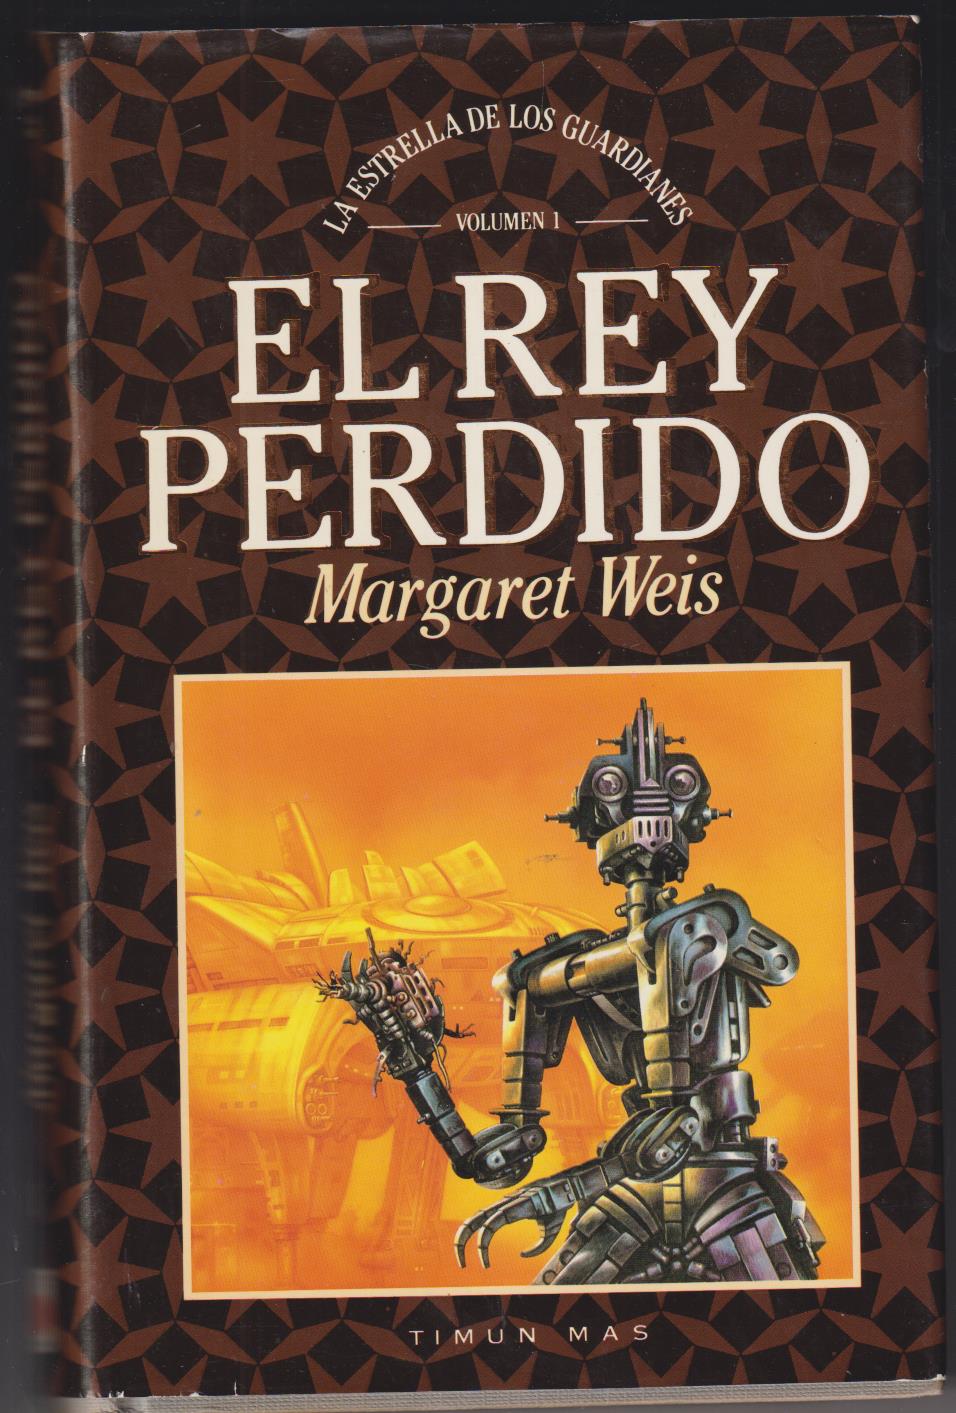 El Rey Perdido. margaret Weis Volumen I. Timun mas, 1992